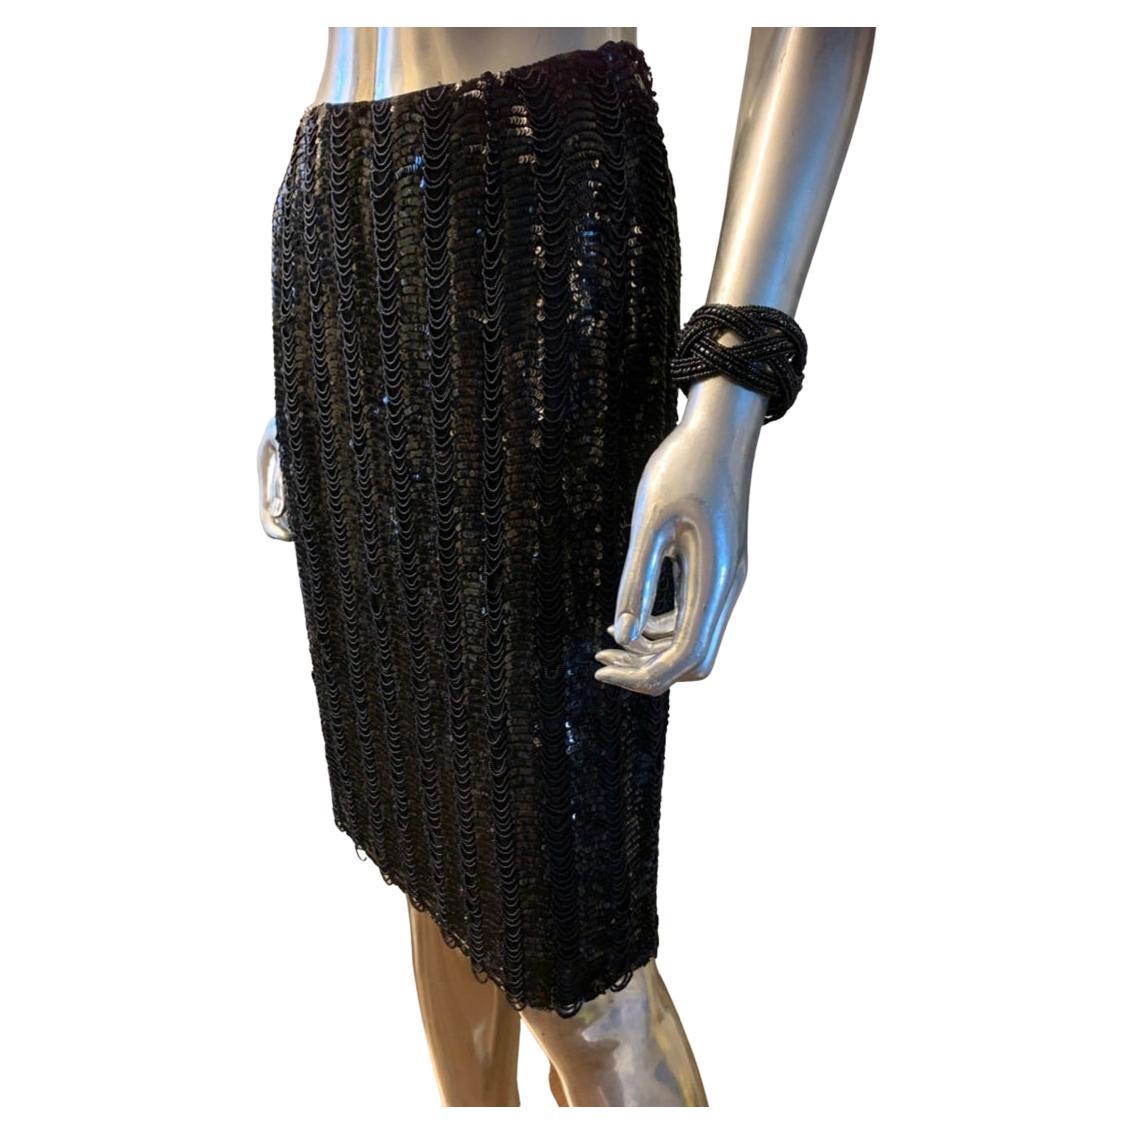 Badgley Mischka Custom Made Completely Hand Beaded Black Evening Skirt Size 4 For Sale